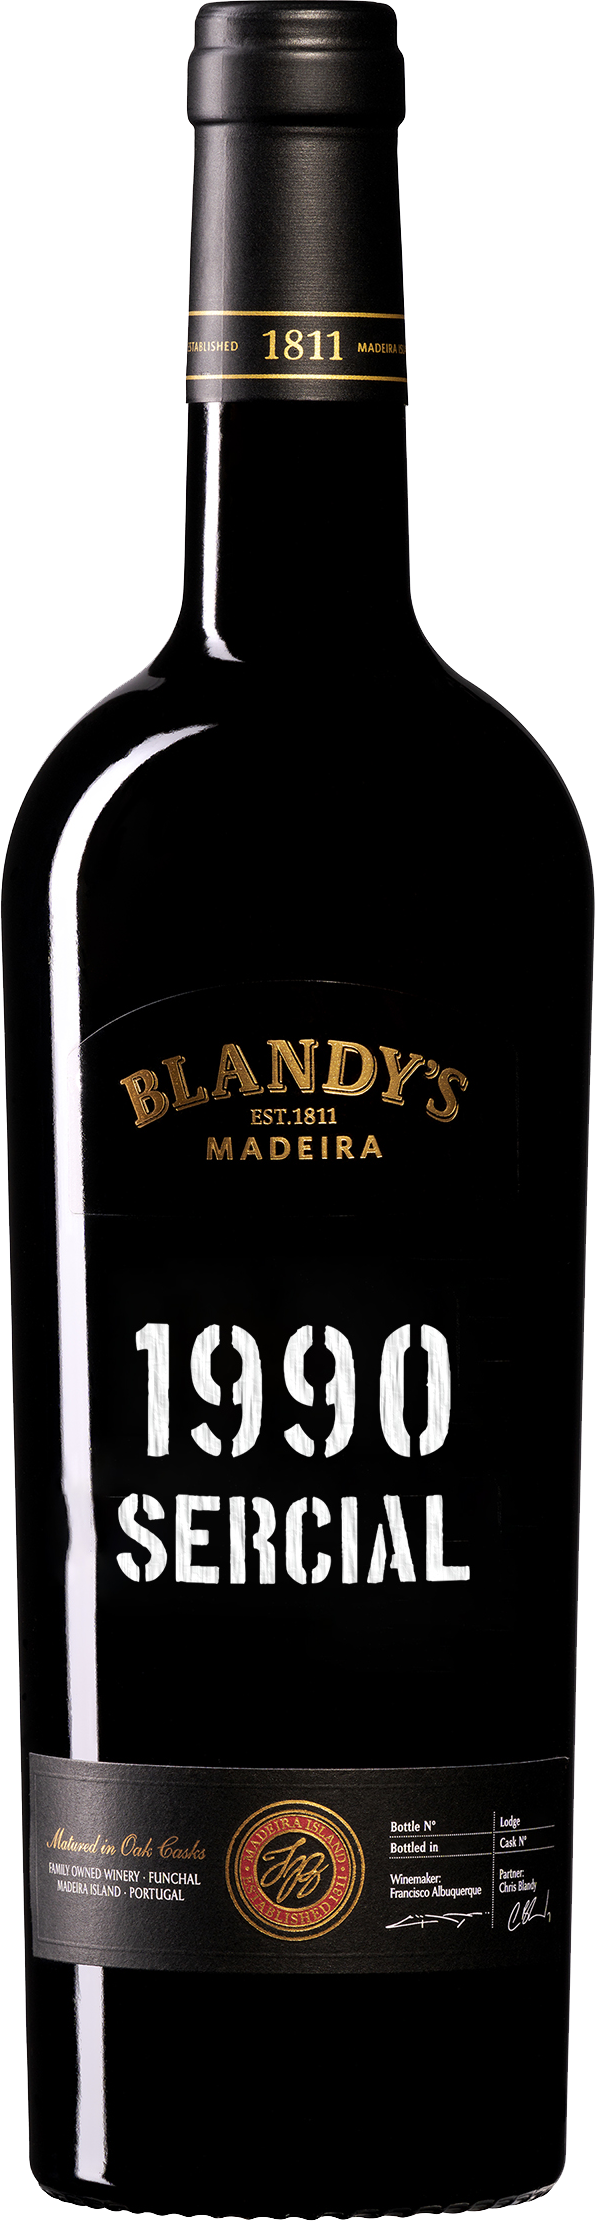 Product Image for BLANDY'S VINTAGE SERCIAL1990 - MAGNUM (1.5L)